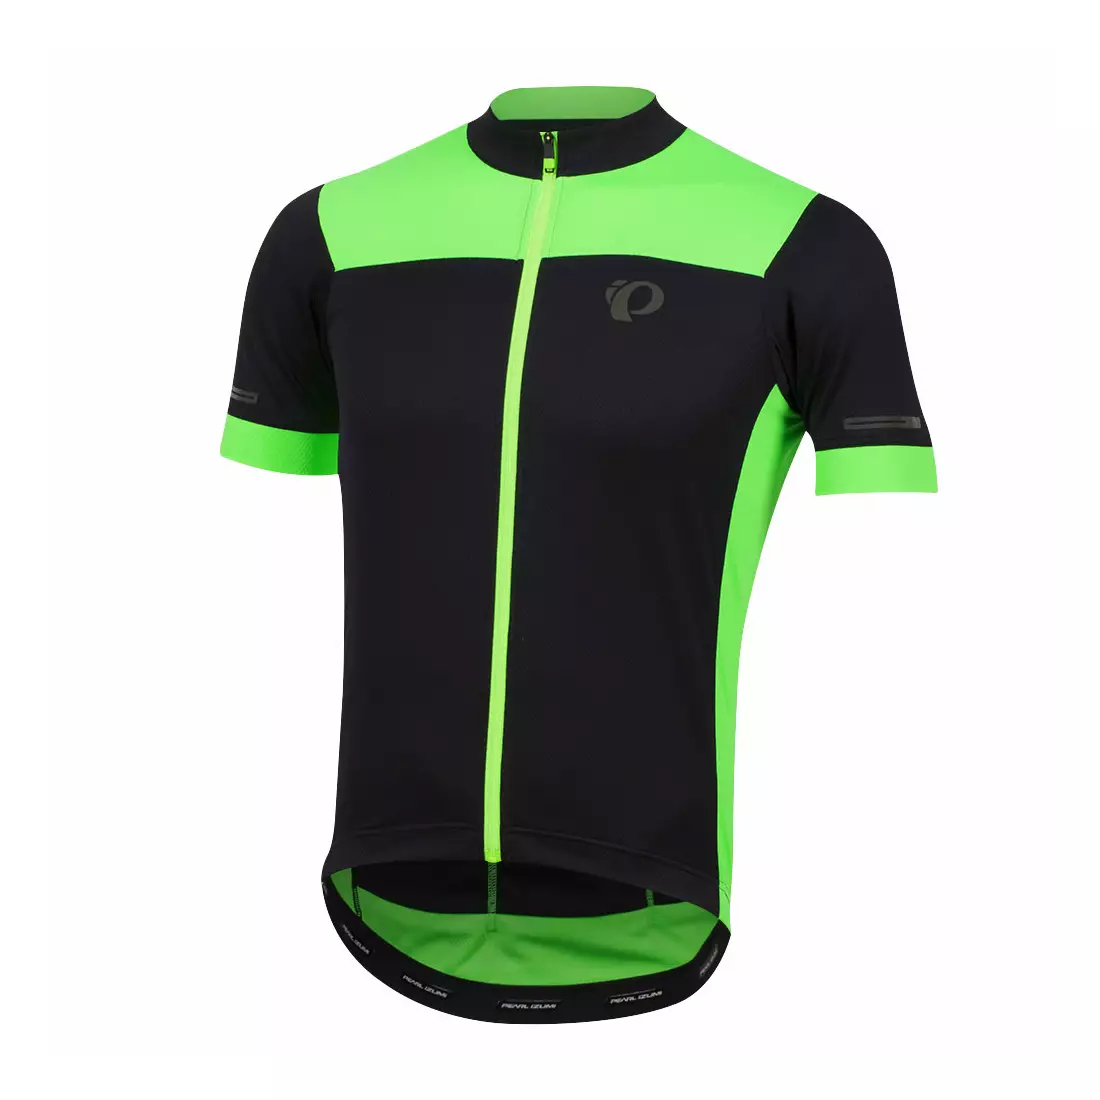 PEARL IZUMI ESCAPE men's cycling jersey, black-fluor green, 11121824-4TG